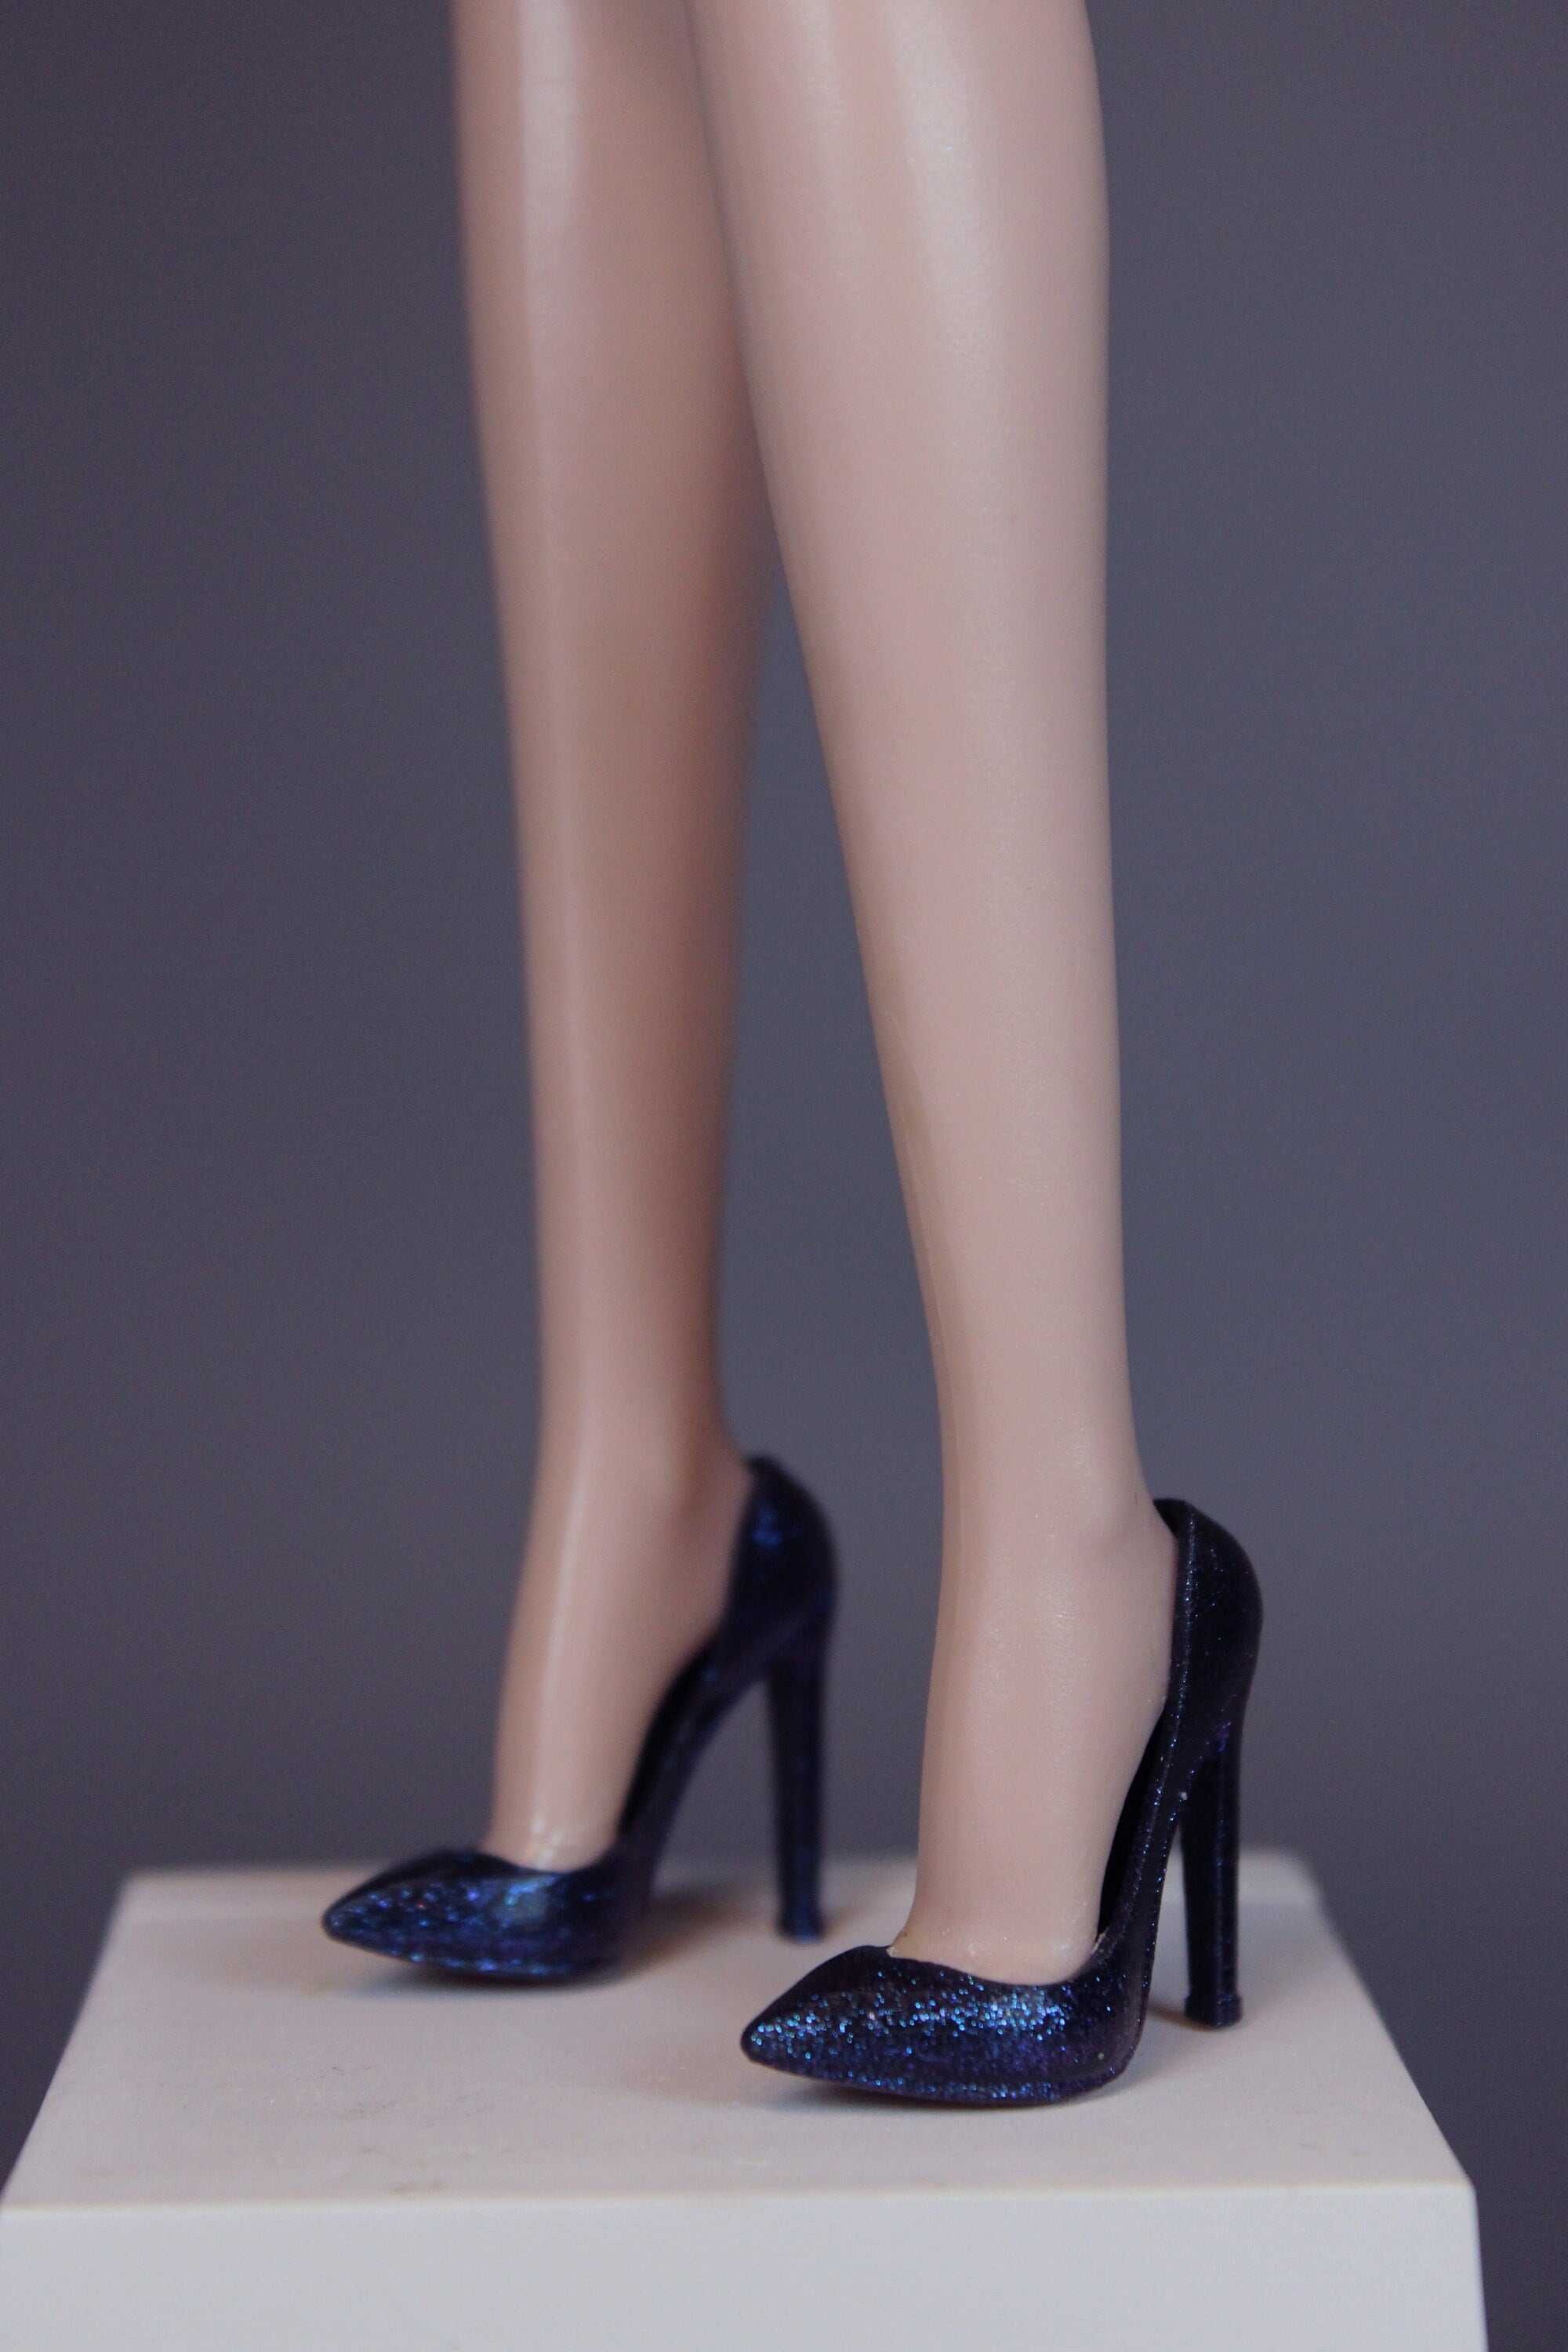 Buy Mattel Barbie Doll Shoes Black Strappy Studded High Heels FASHIONISTAS  BLACK HEELS Barbie Black Shoes Online in India - Etsy